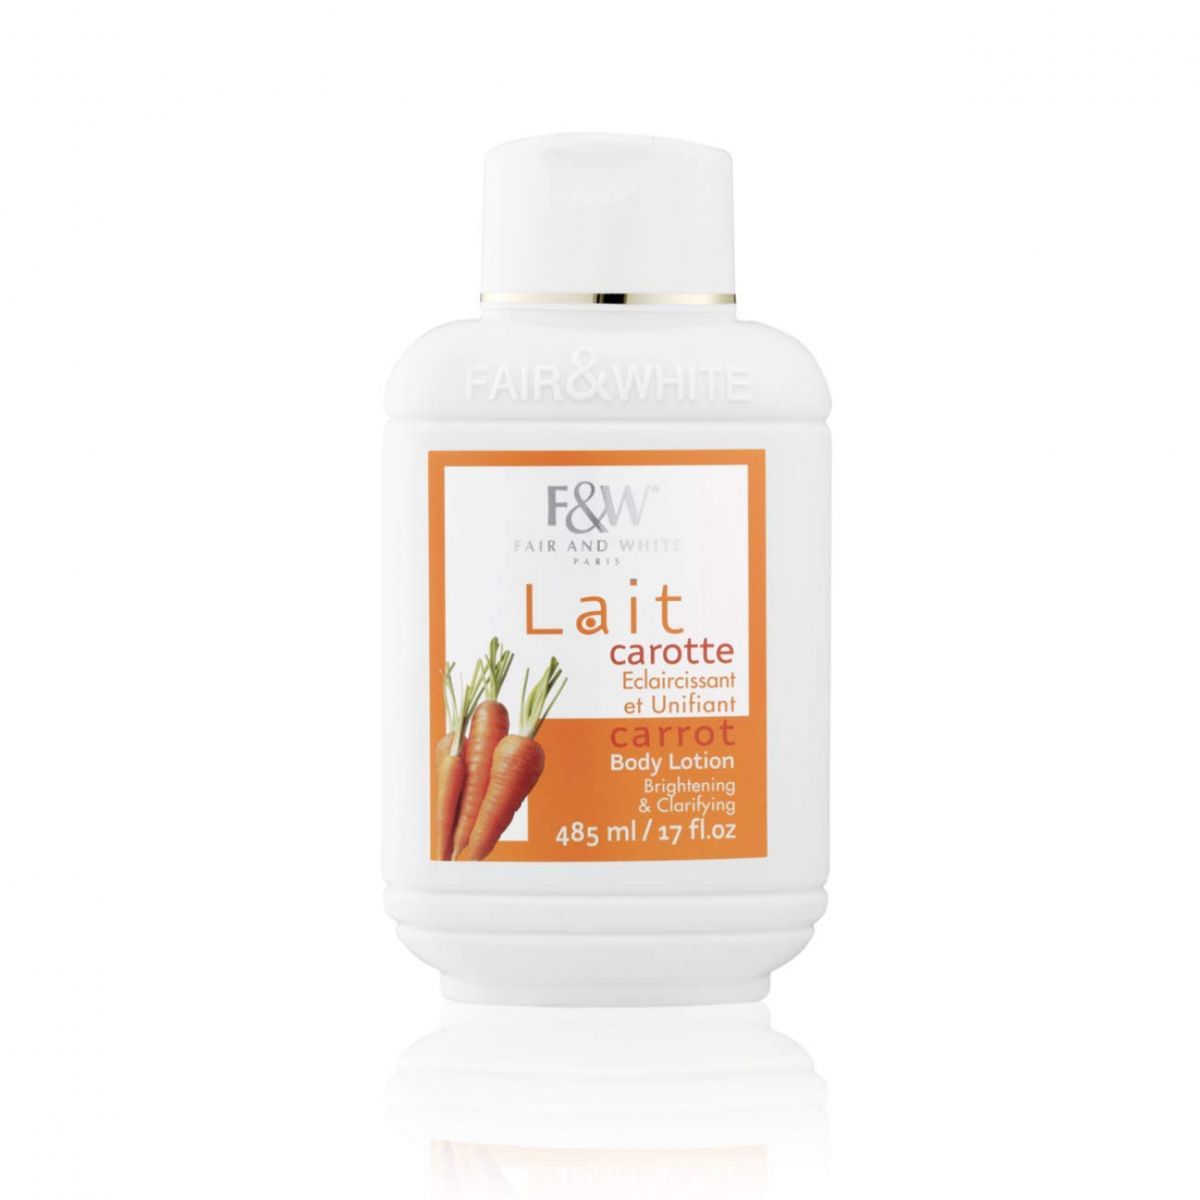 Fair and white - Original carrot body lotion 485ml